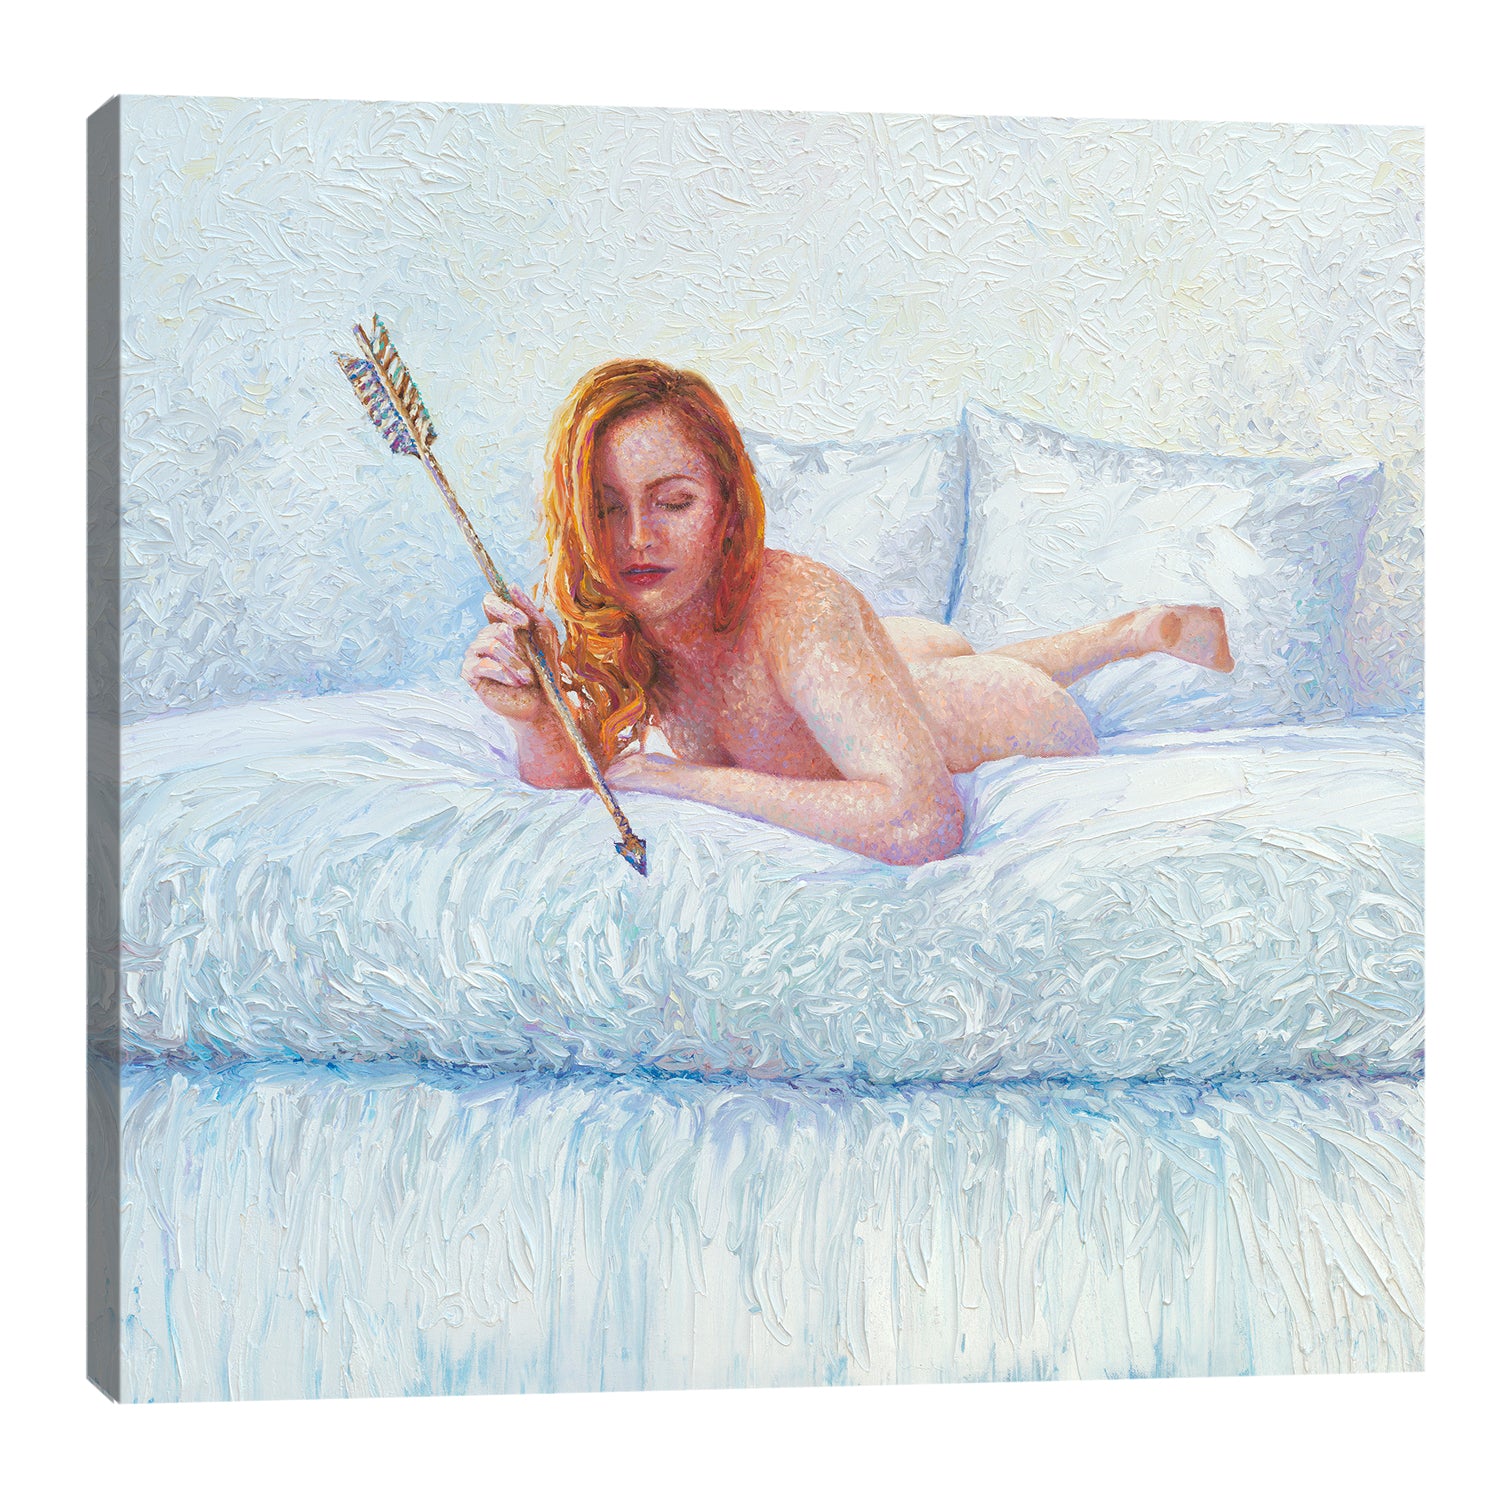 Iris-Scott,Modern & Contemporary,People,woman,women,lady,cupid,arrows,bed,white,pillows,